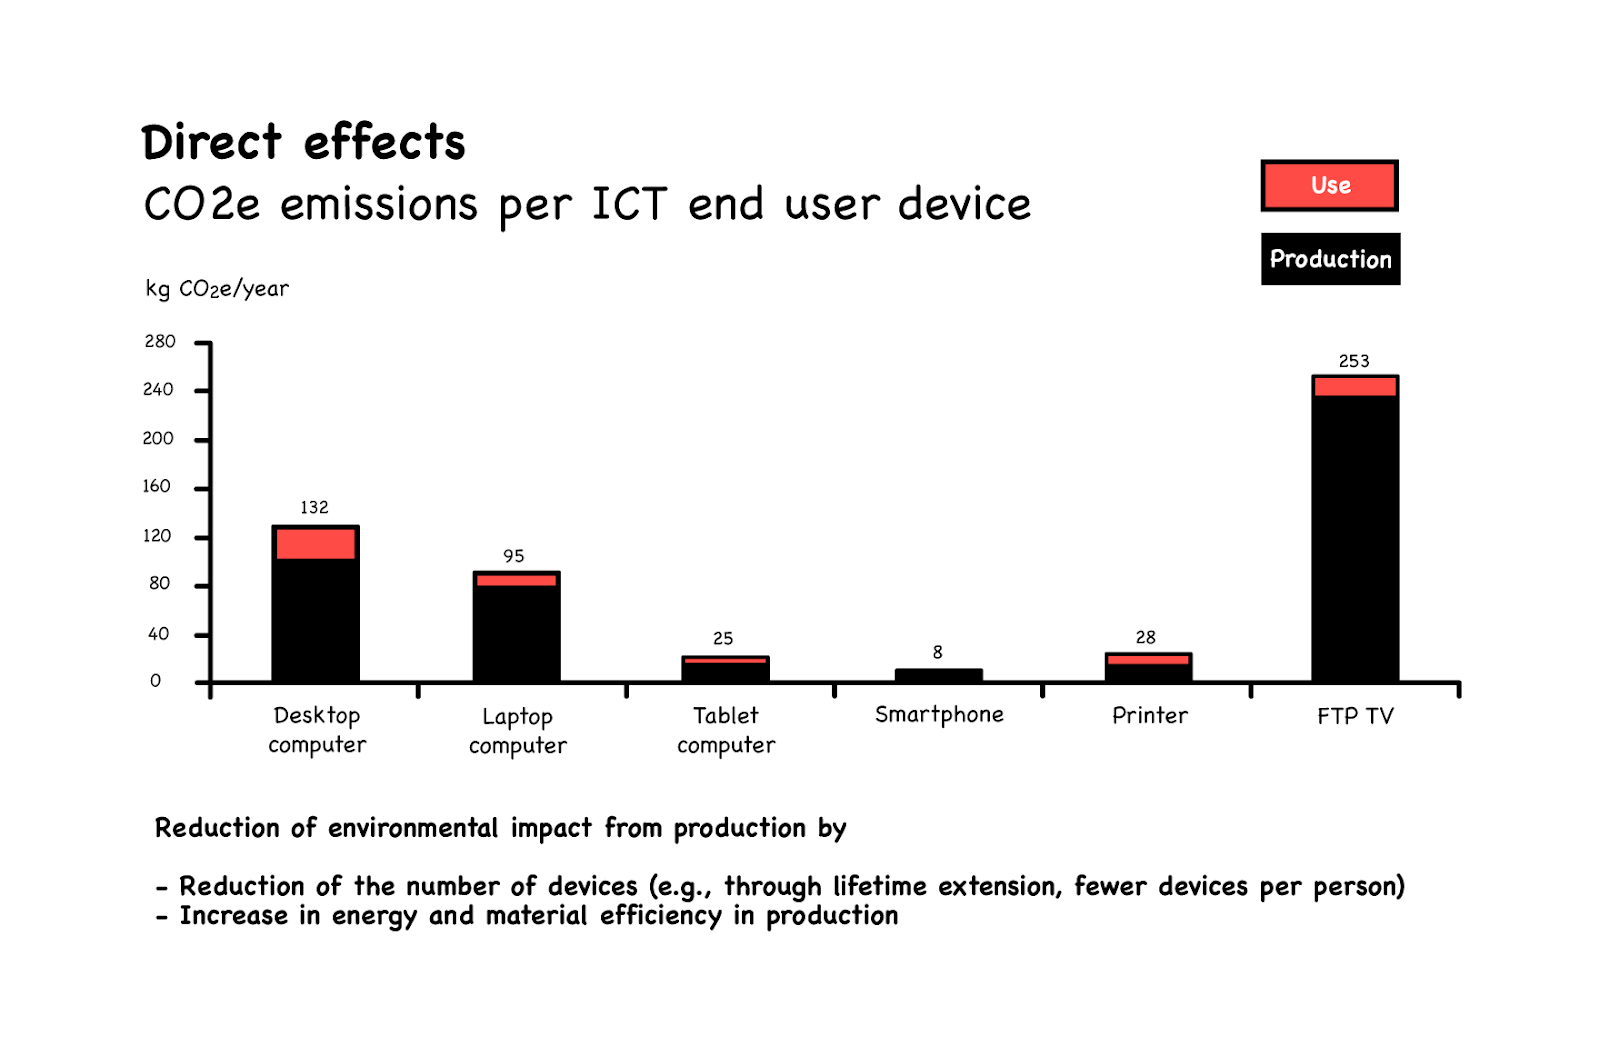 C02e emissions per ICT end user device